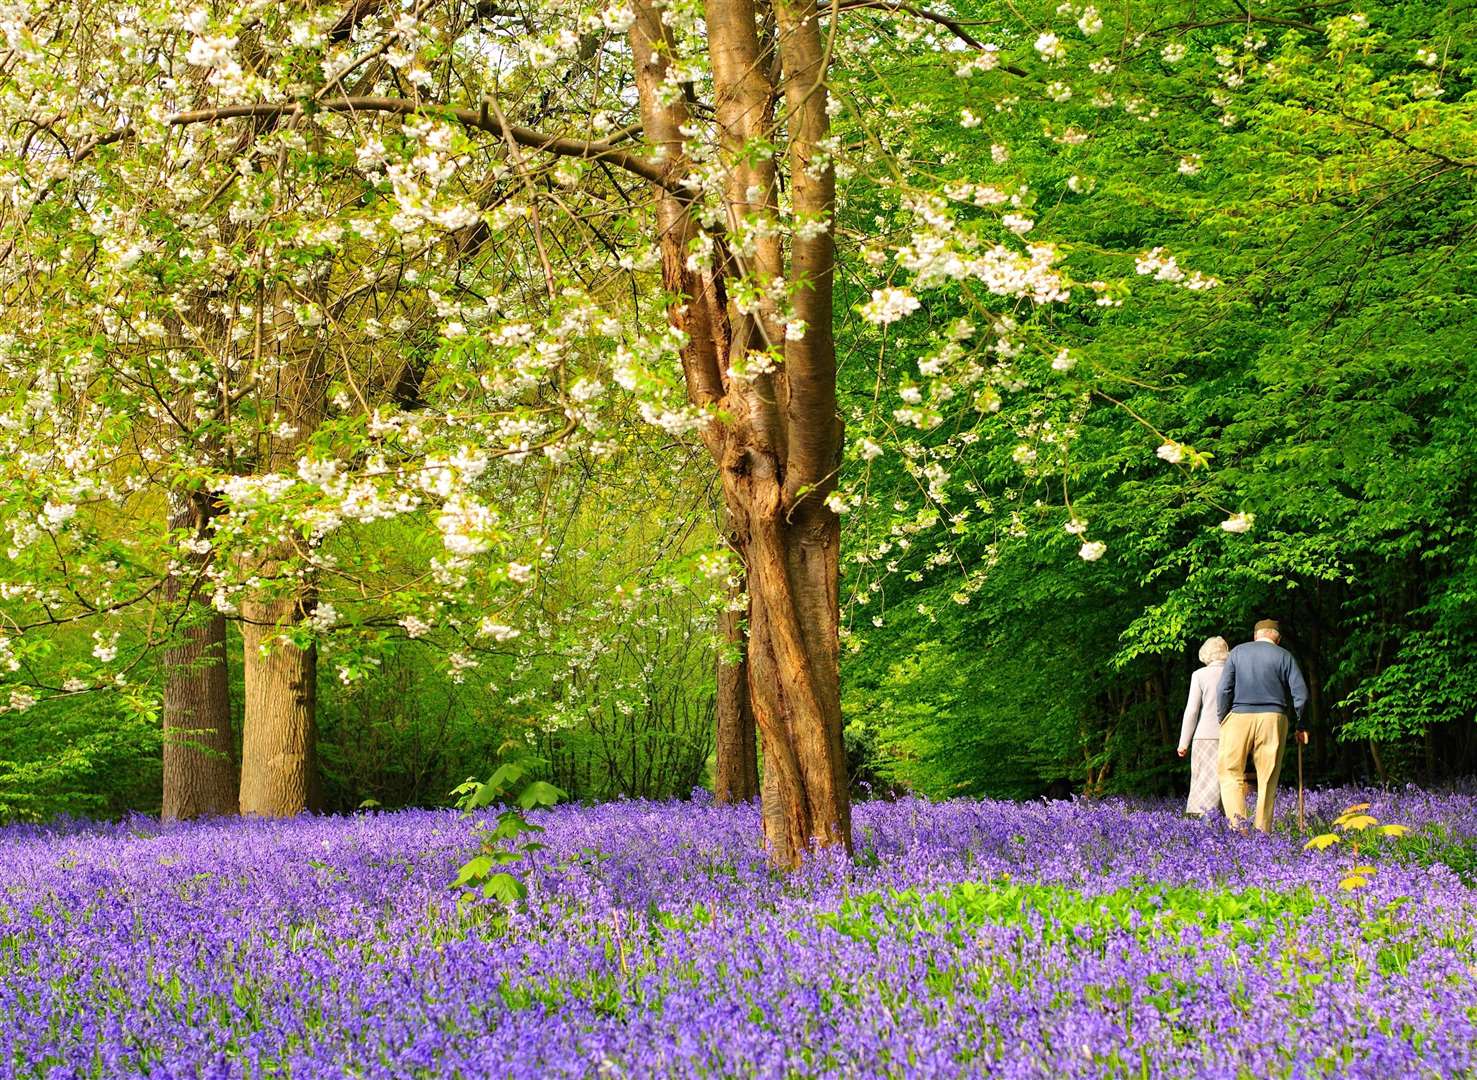 Bluebells in full bloom at Hole Park, Rolvenden